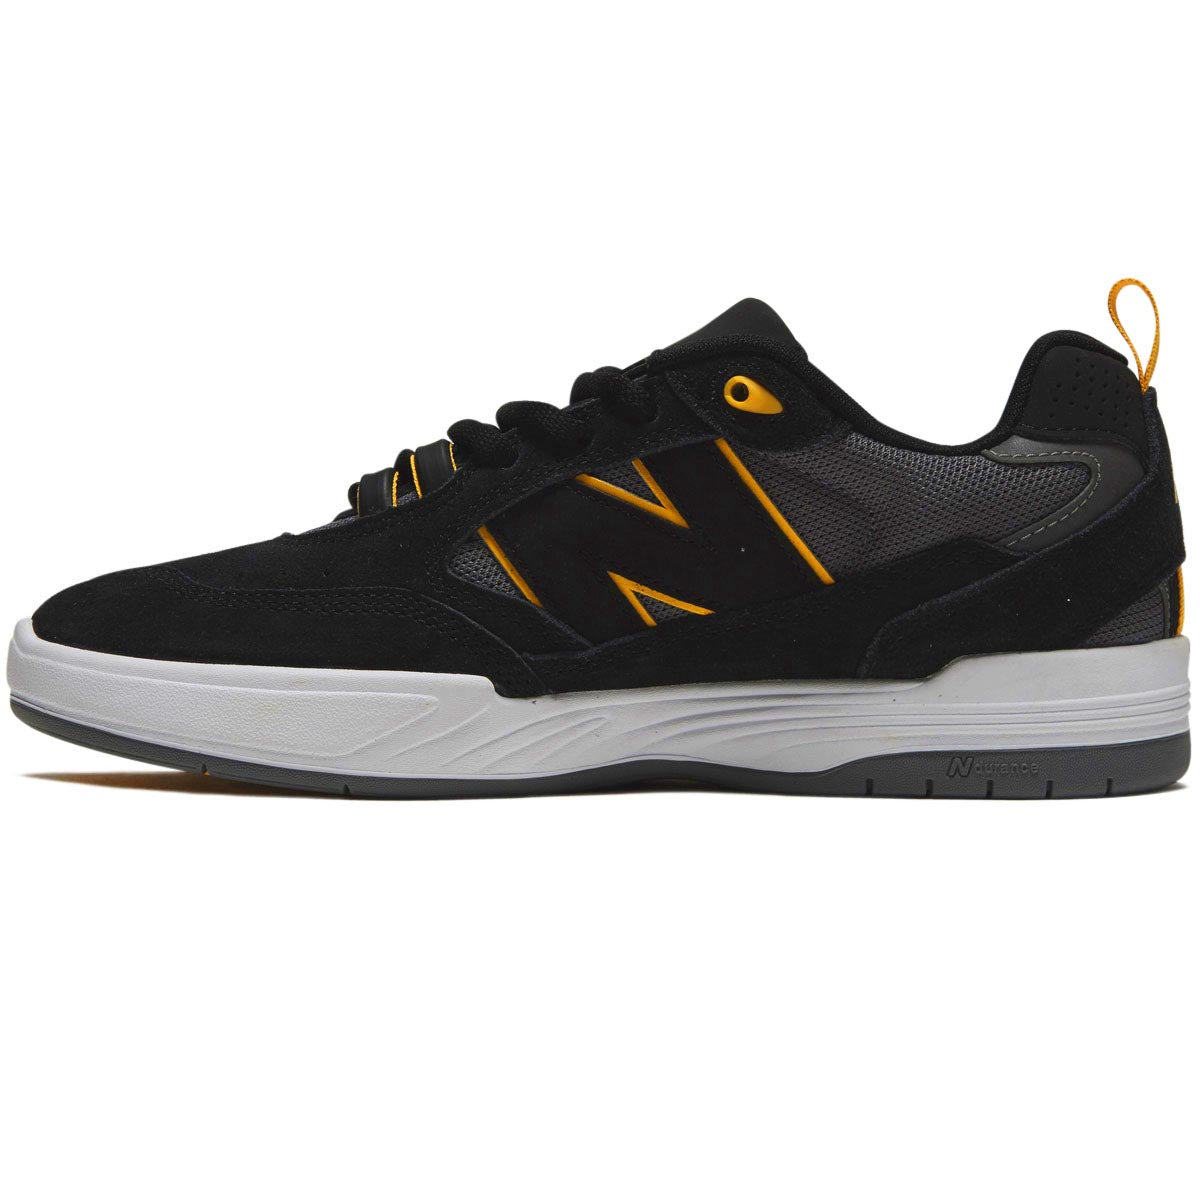 New Balance 808 Tiago Shoes - Black/Yellow image 2